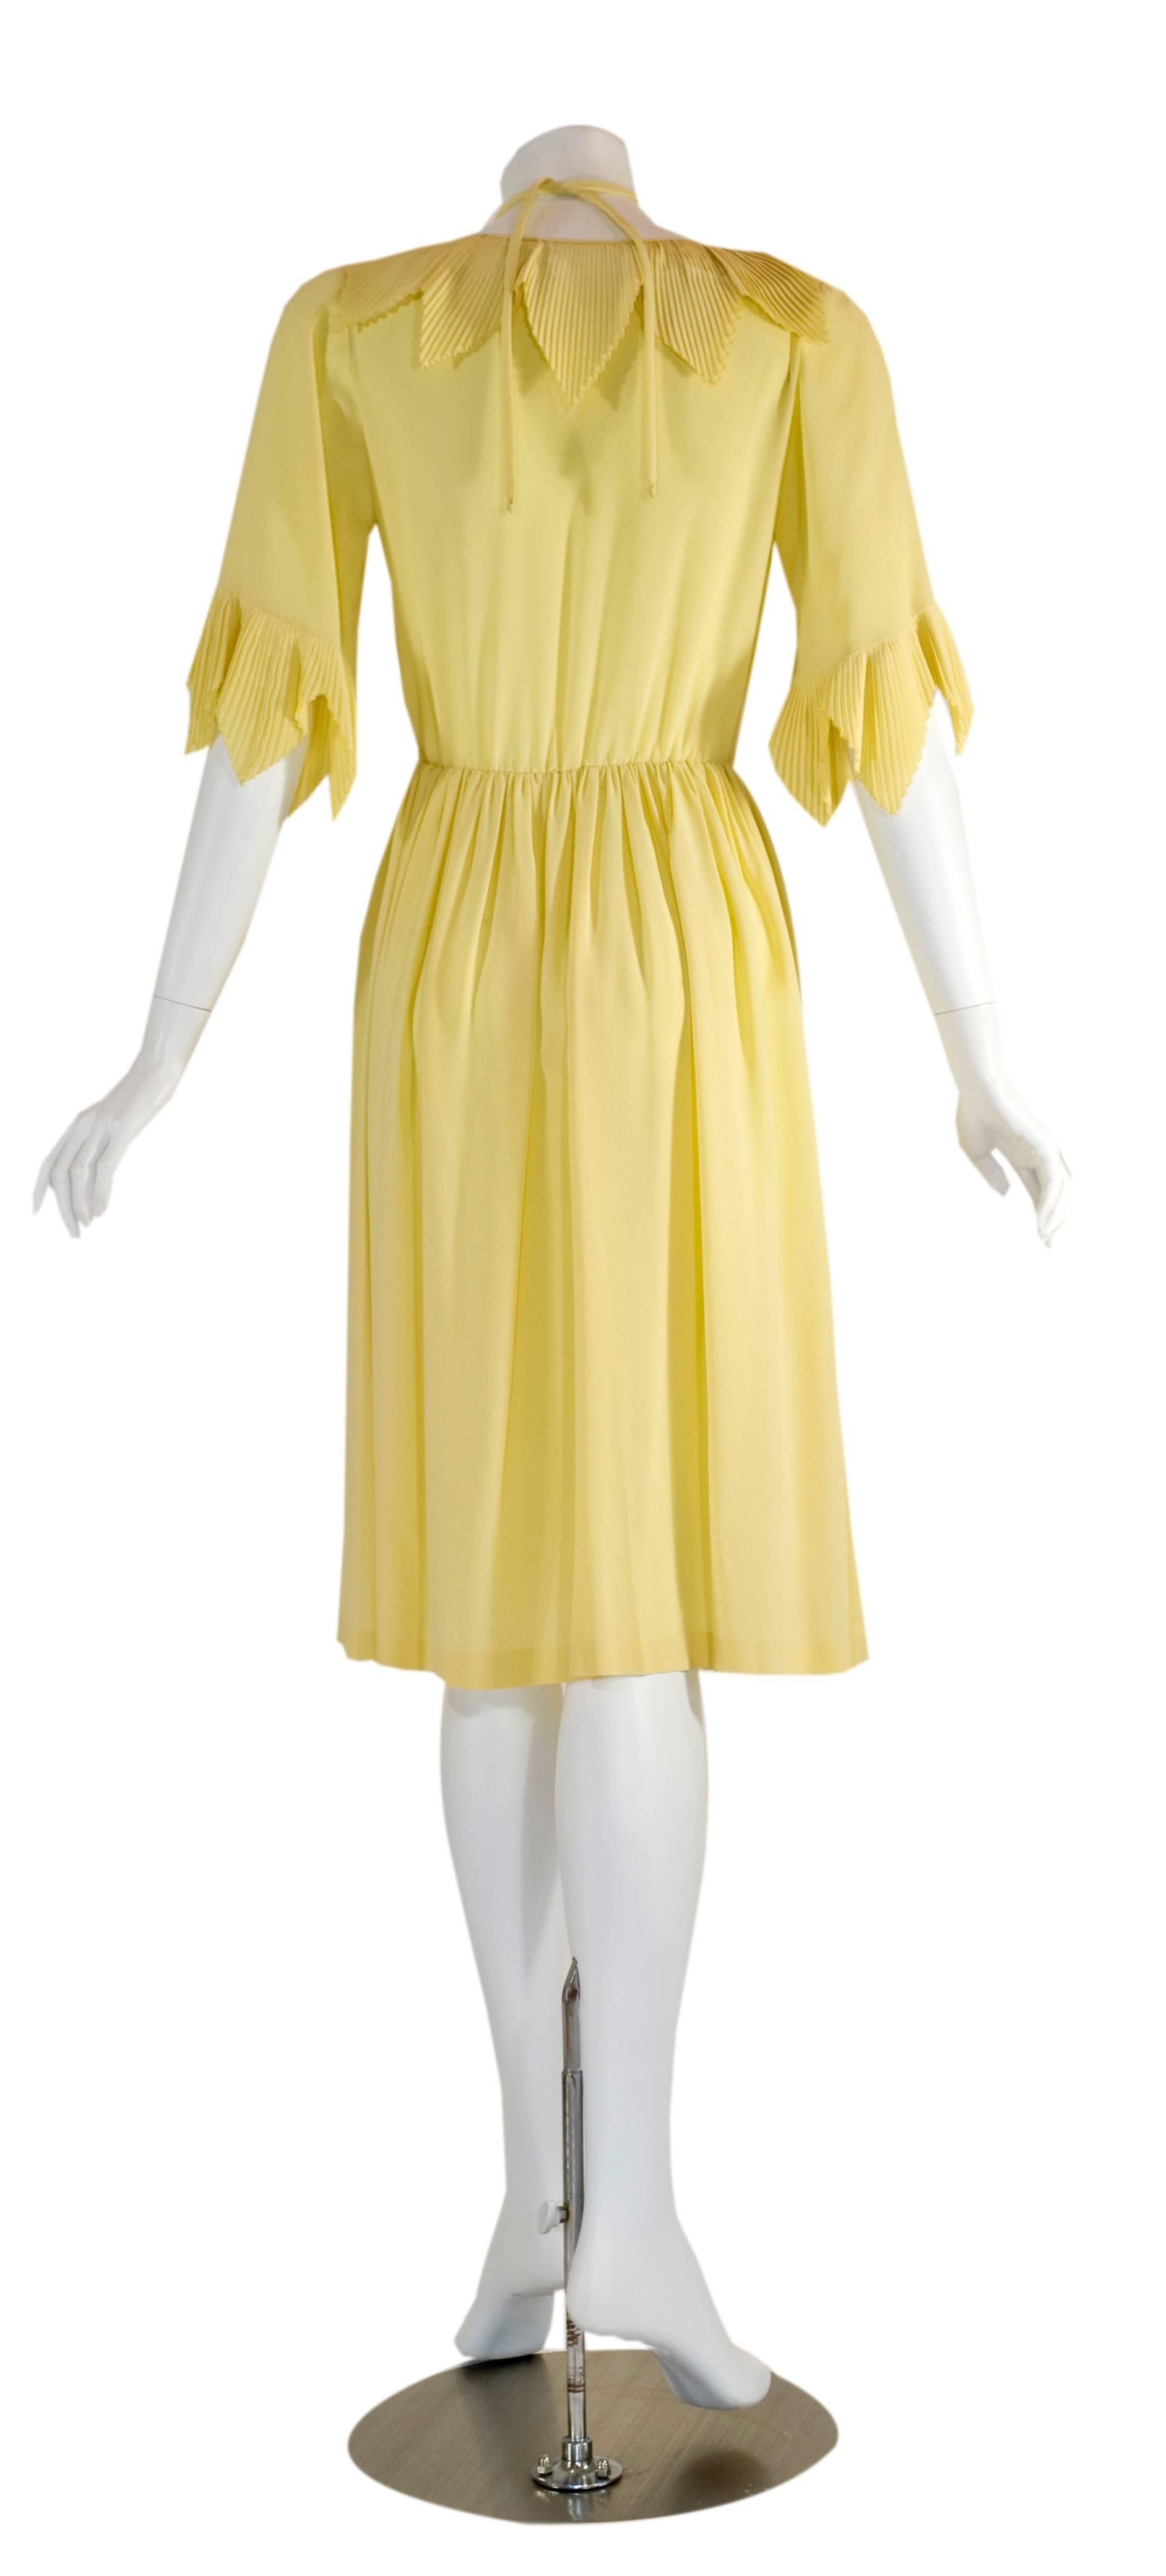 Women's Karl Lagerfeld for Chloé Soft Yellow Silk Accordion Pleat Collar Dress, 1970s